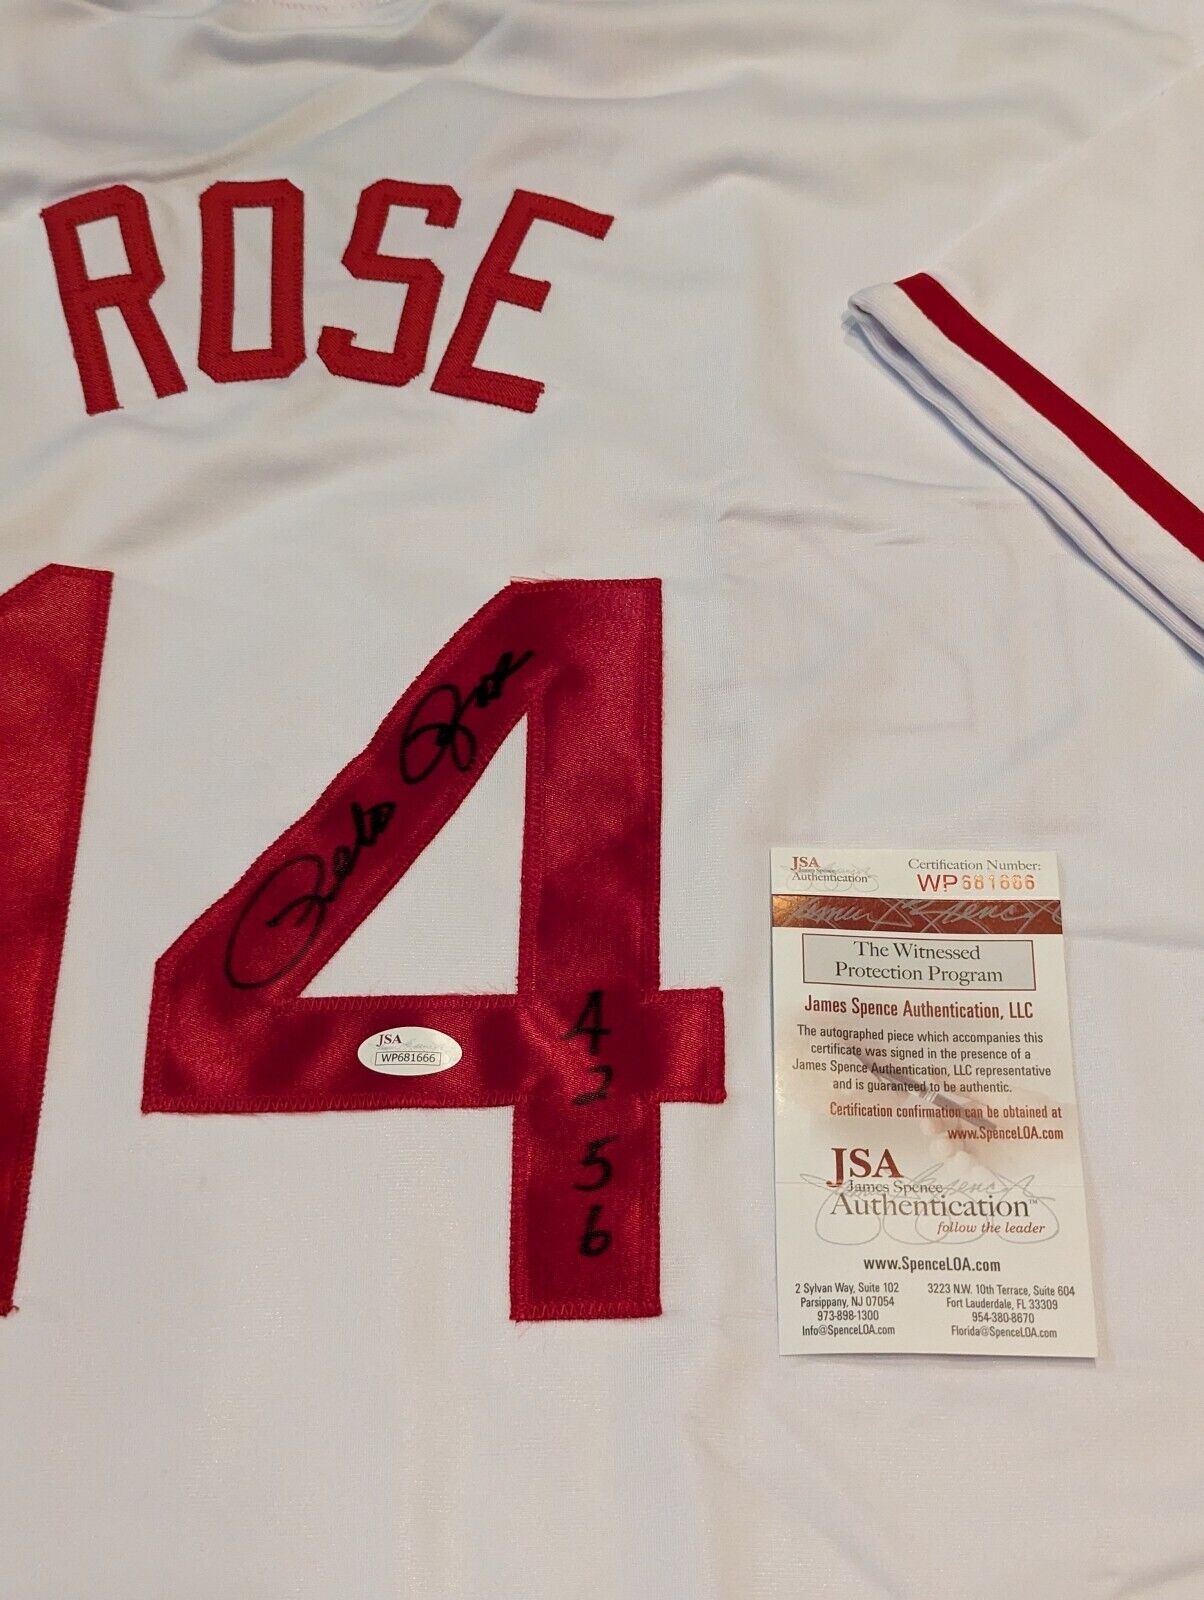 MVP Authentics Cincinnati Reds Pete Rose Autographed Signed Inscribed "4256" Jersey Jsa Coa 148.50 sports jersey framing , jersey framing